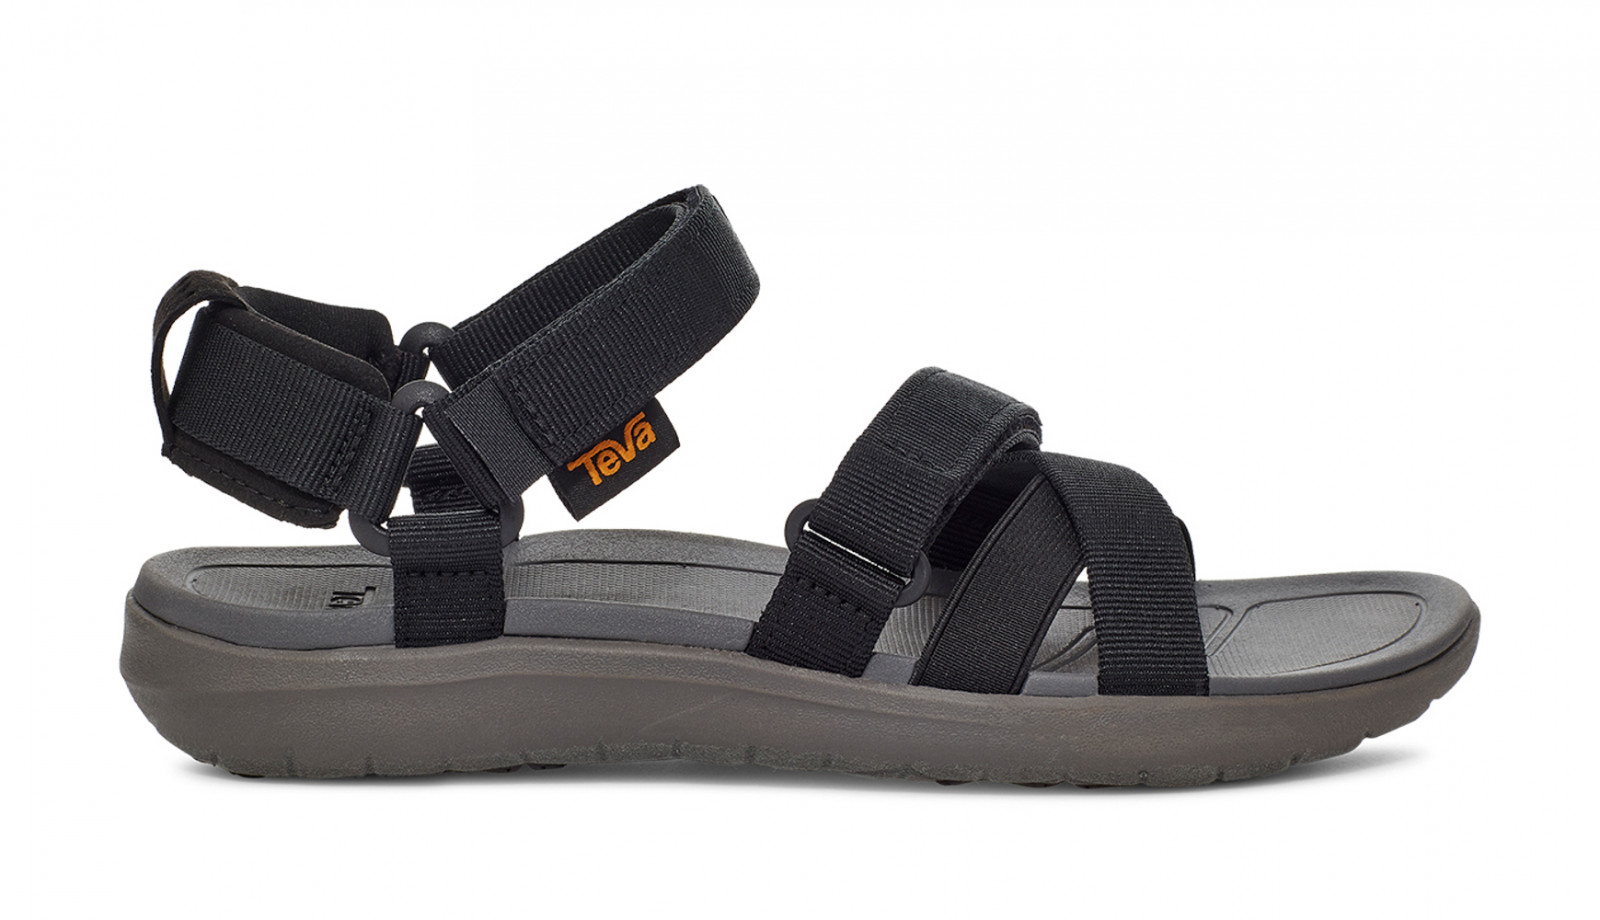 Dámské sandály Teva Sanborn Mia Velikost bot (EU): 37 / Barva: černá